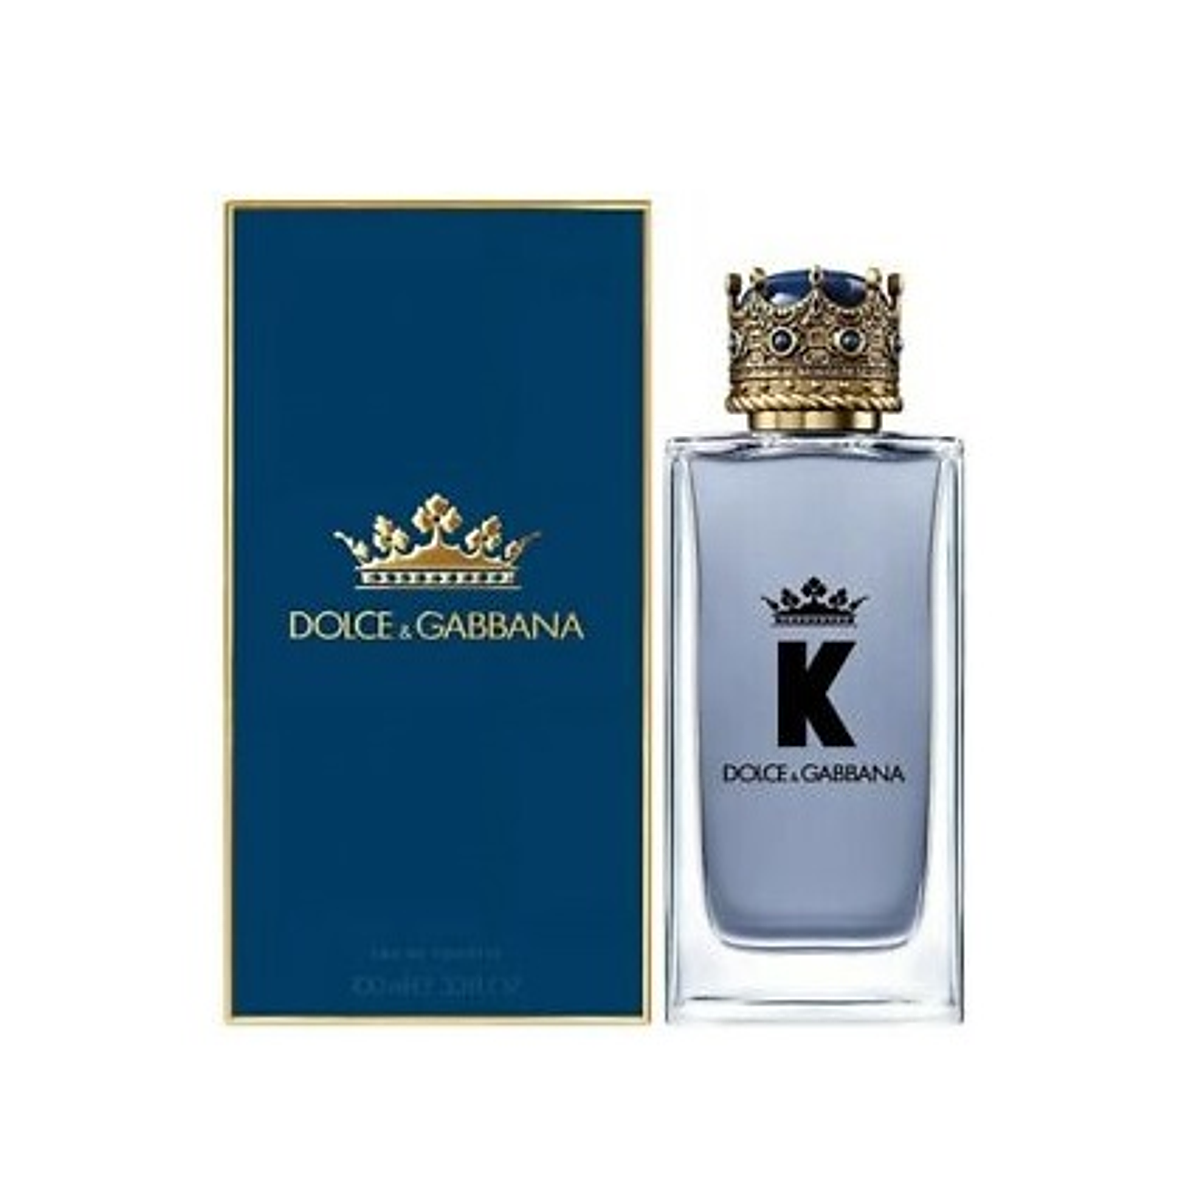 Perfume King Dolce Gabbana Varon Edt 100 Ml